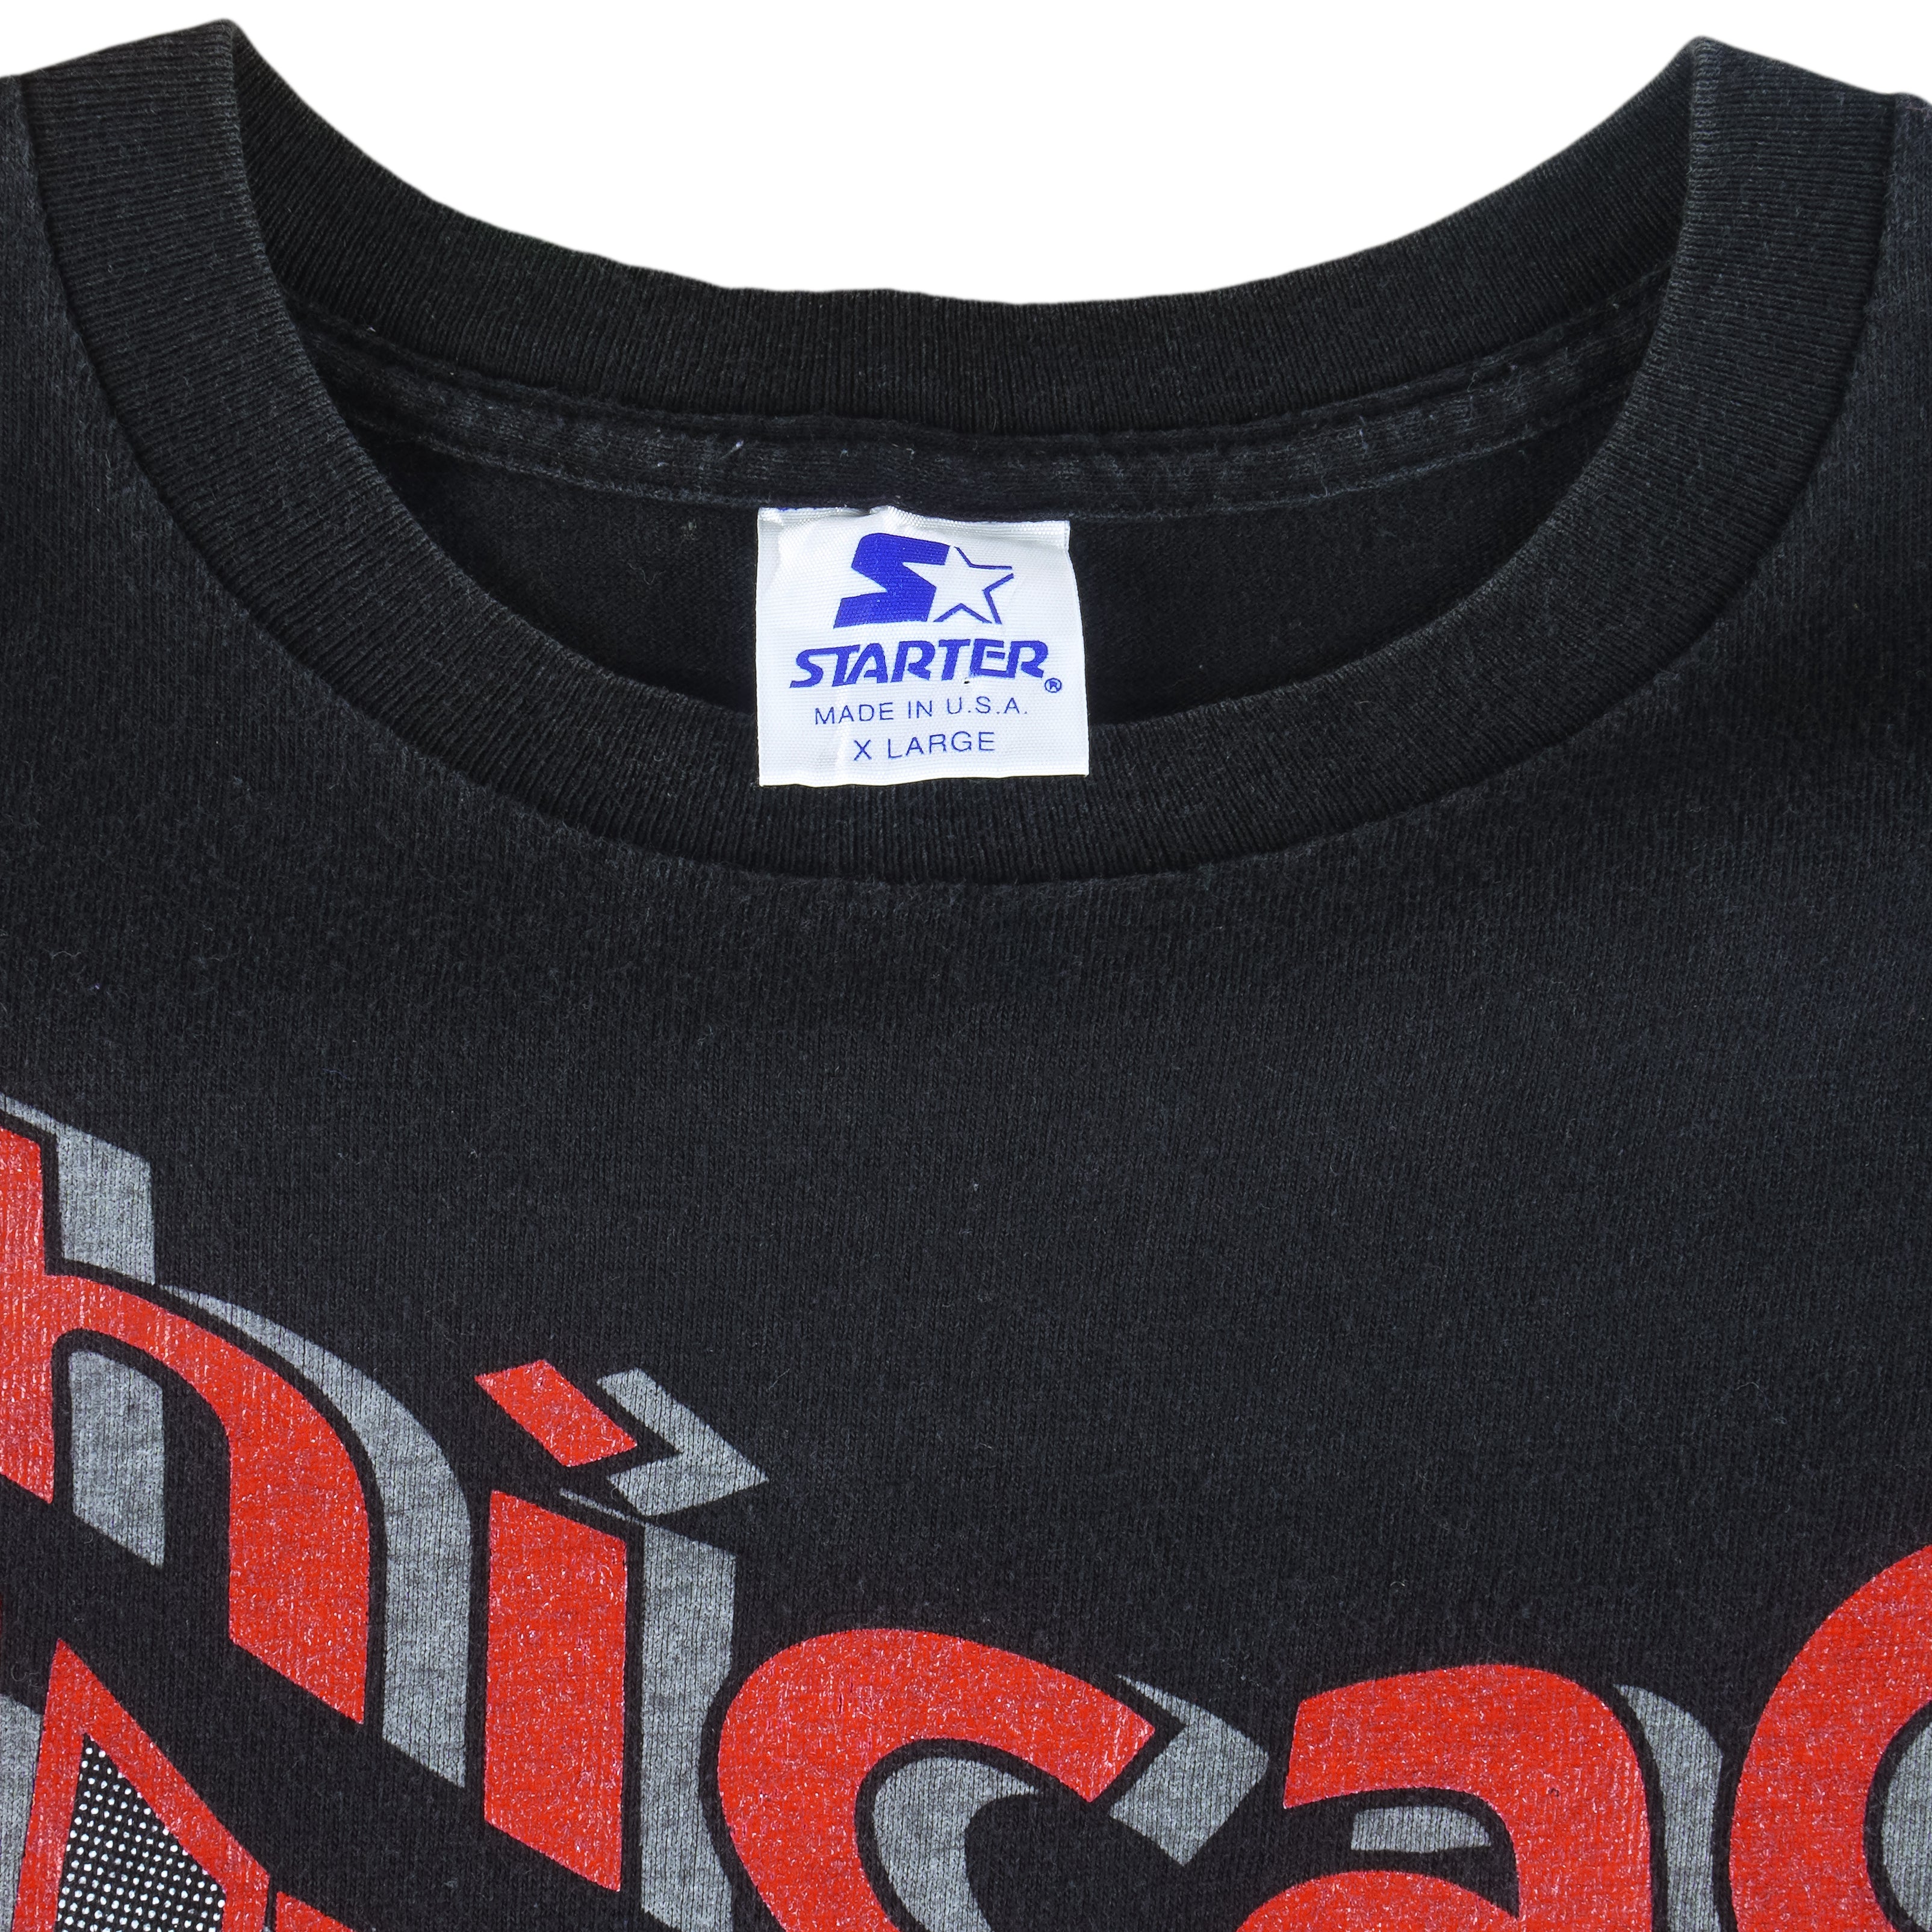 Vintage Chicago Blackhawks All Over Print T-Shirt